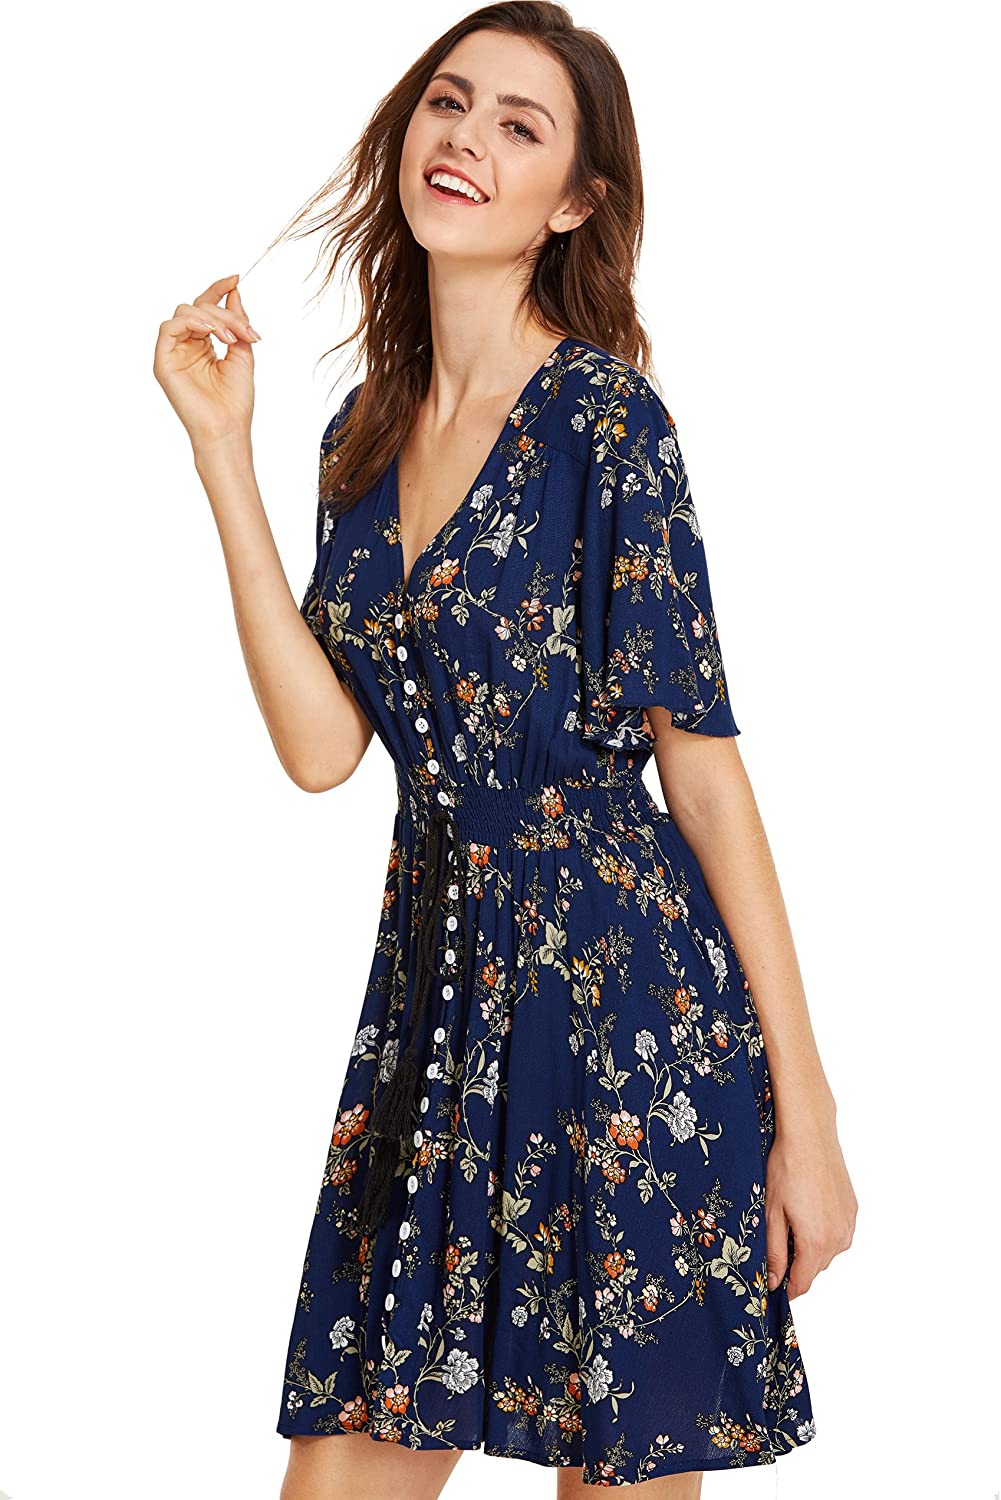 Milumia Women's Boho Button Up Floral Print Flowy Party Dress | eBay